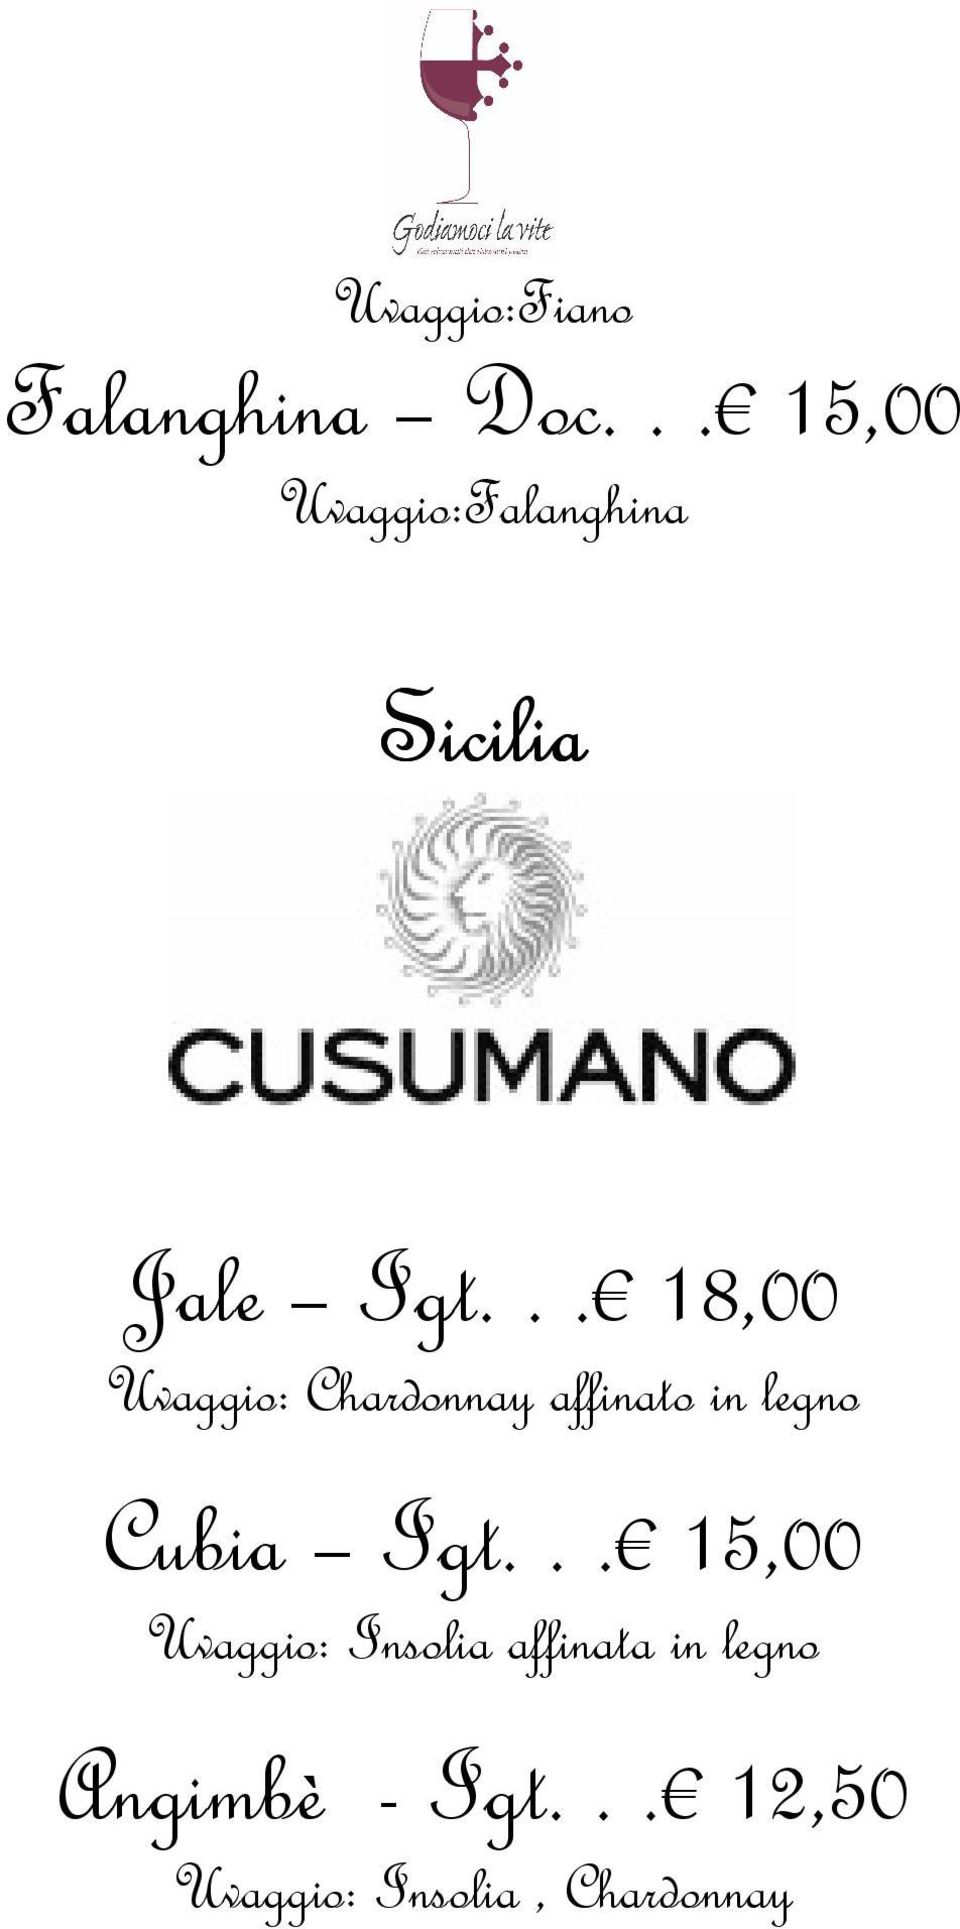 .. 18,00 Uvaggio: Chardonnay affinato in legno Cubia Igt.